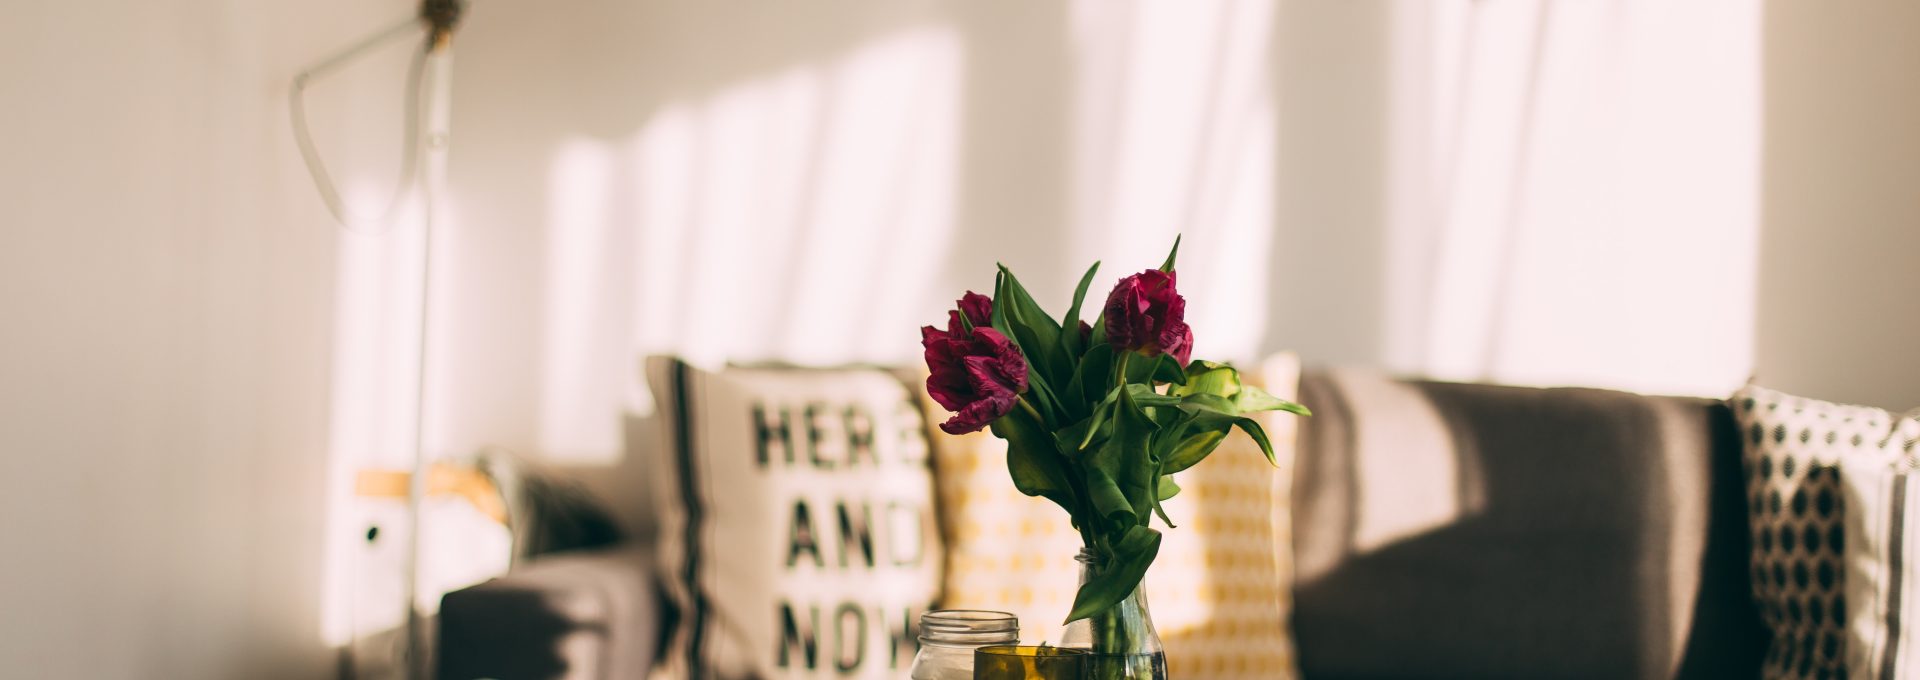 Rose flower vase on the table